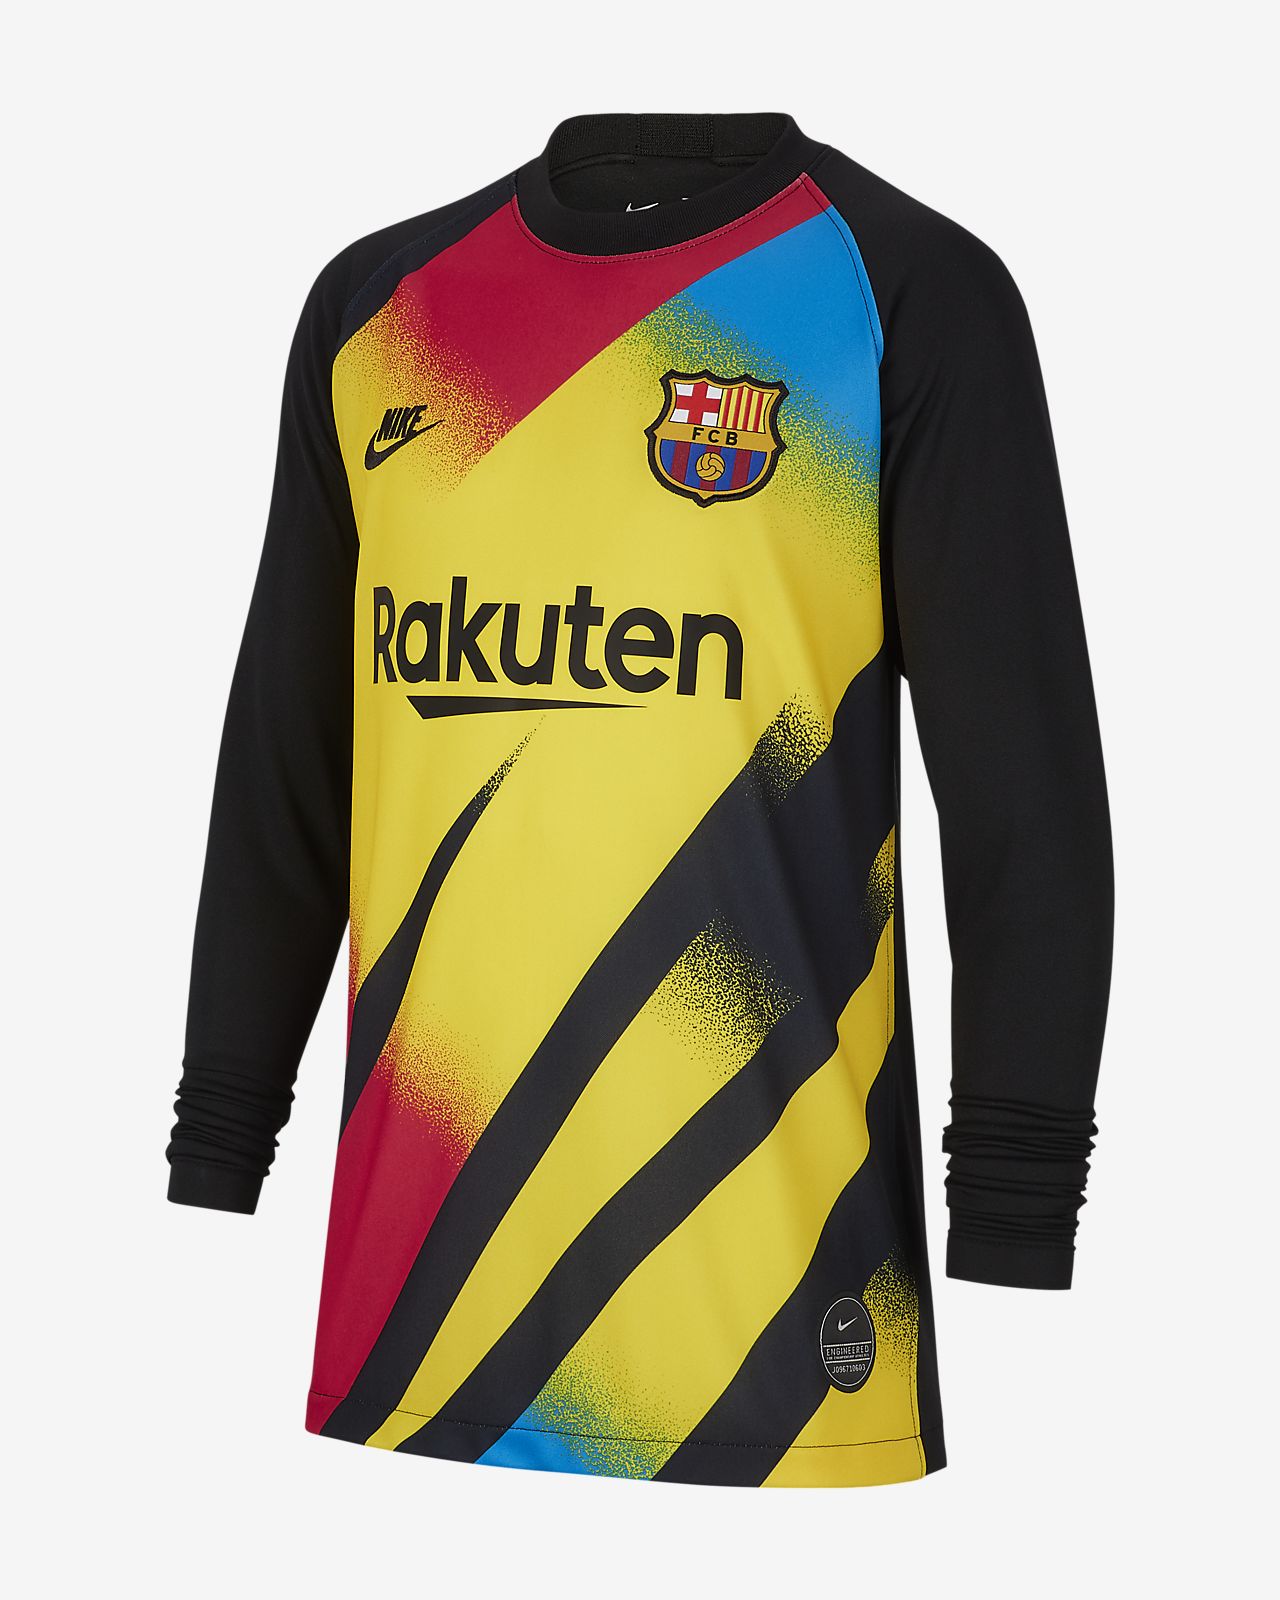 barcelona jersey 2019 long sleeve